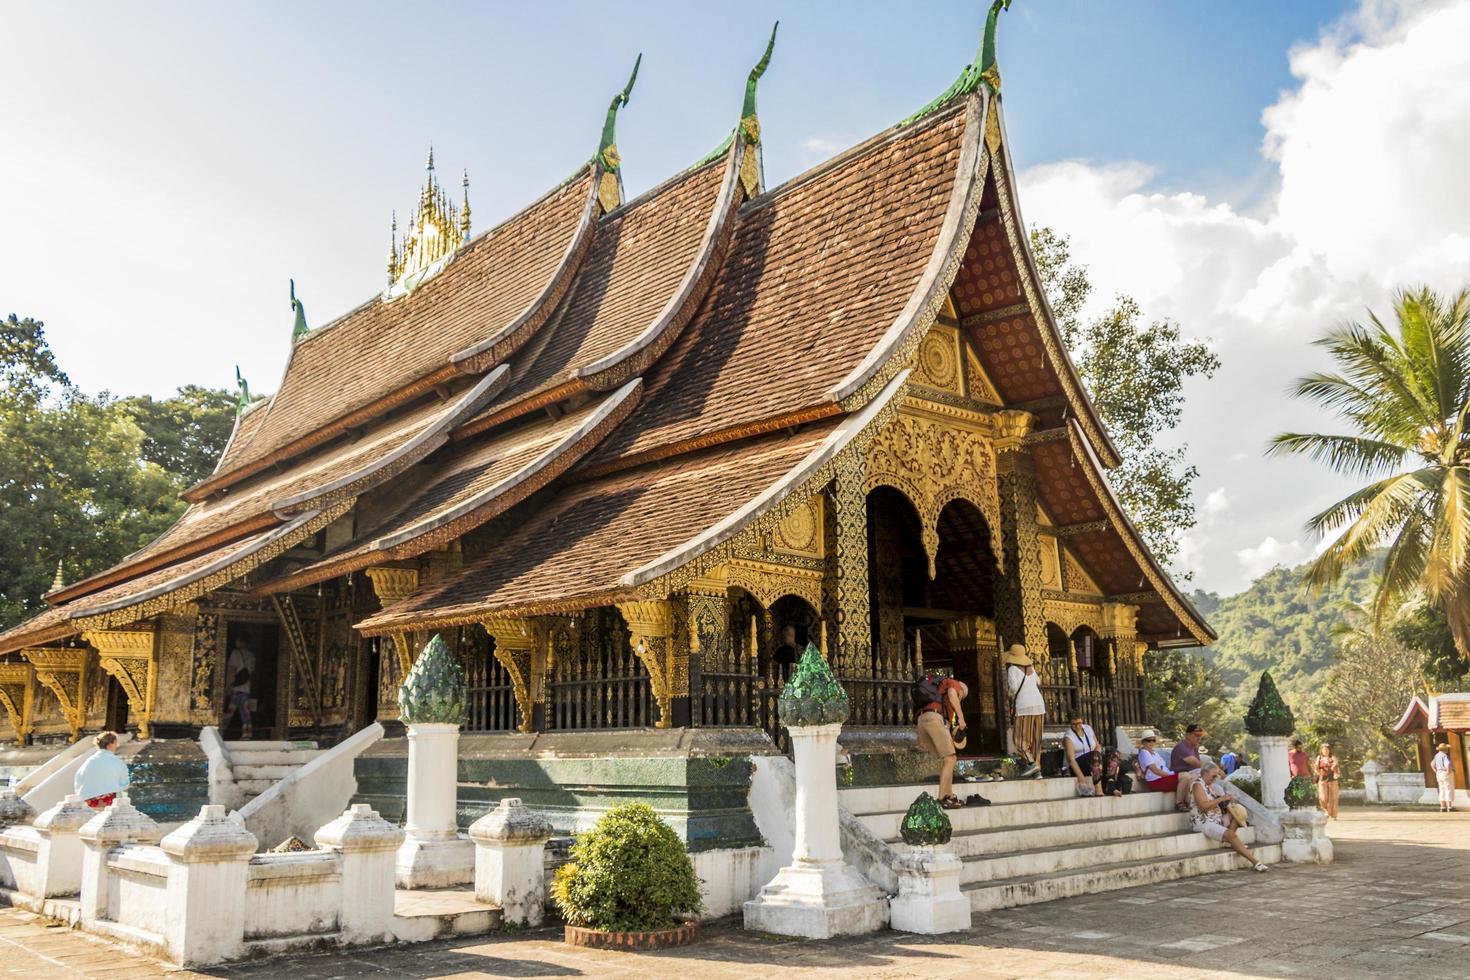 luang prabang, laos 2018-wat xieng thong tempel in luang prabang, laos foto